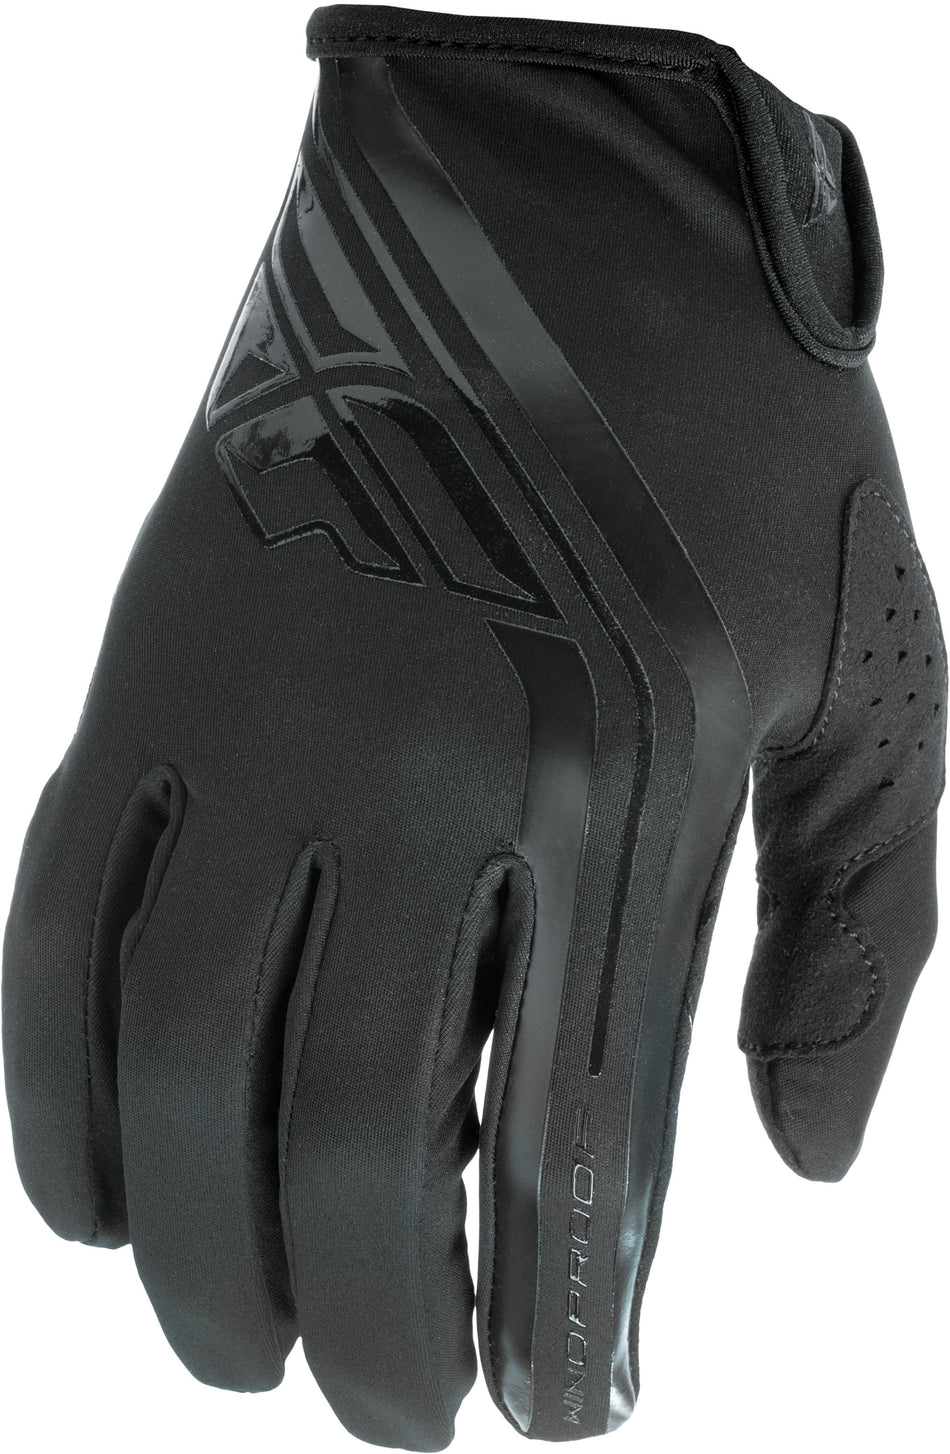 FLY RACING Windproof Gloves Black Sz 13 371-14013